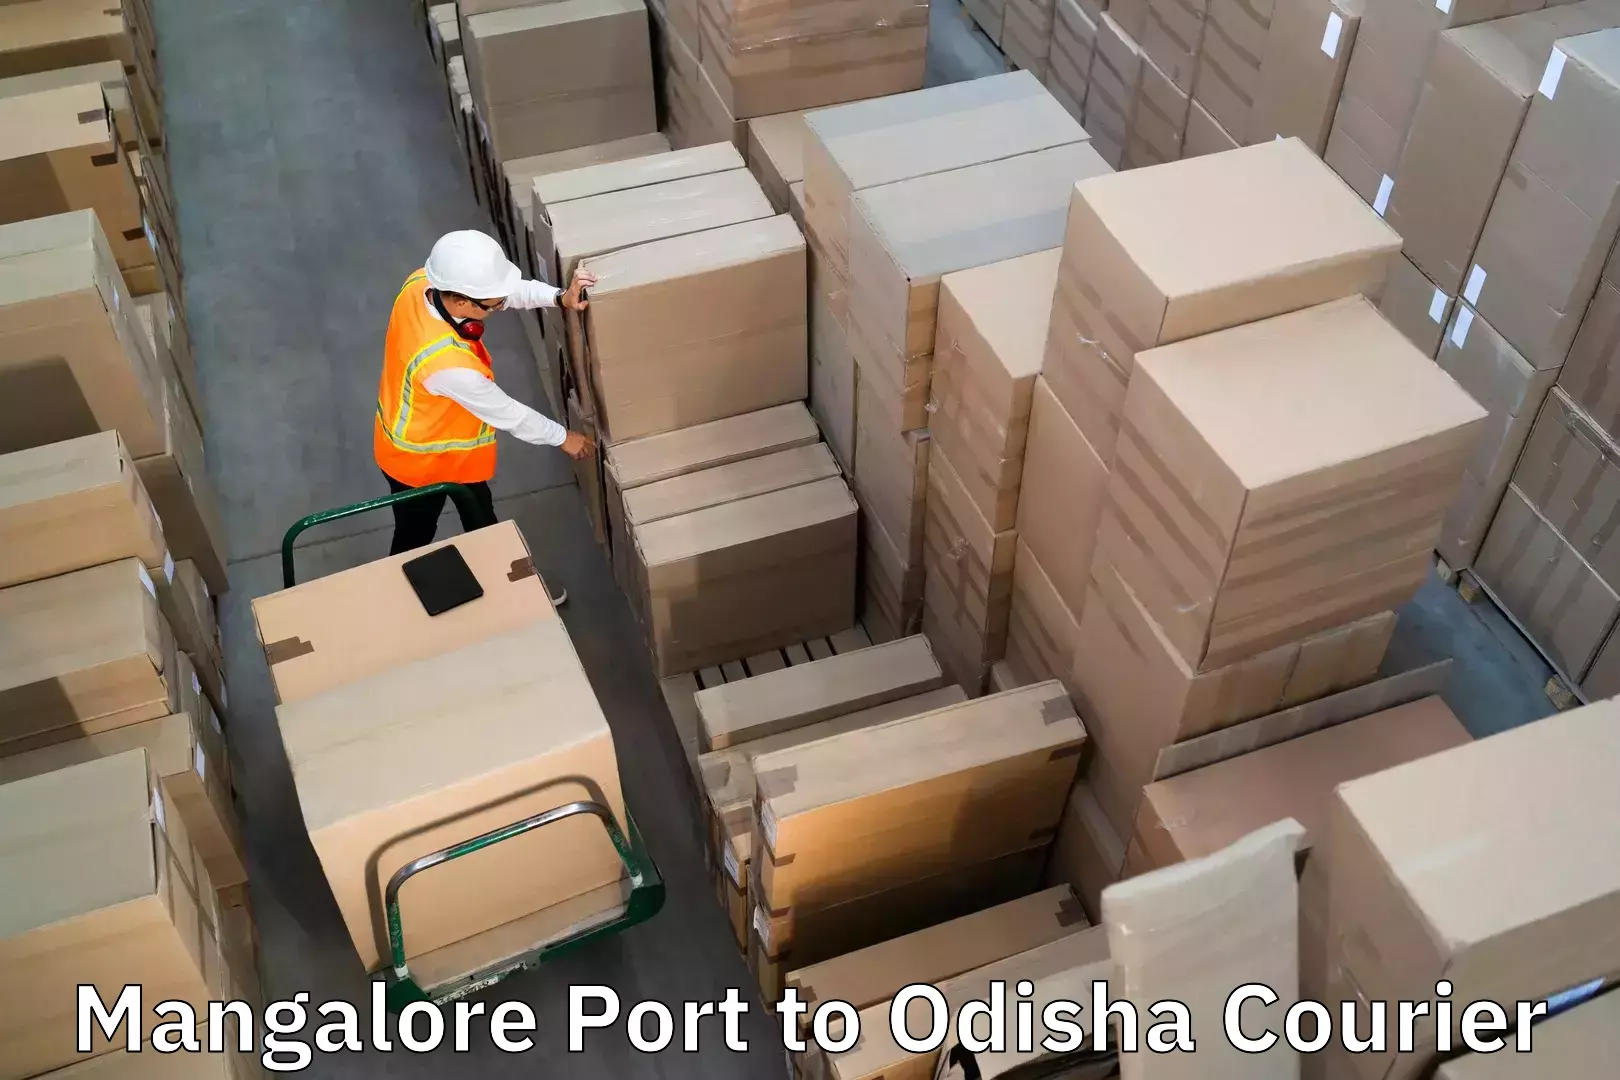 Luggage transfer service Mangalore Port to Bhubaneswar